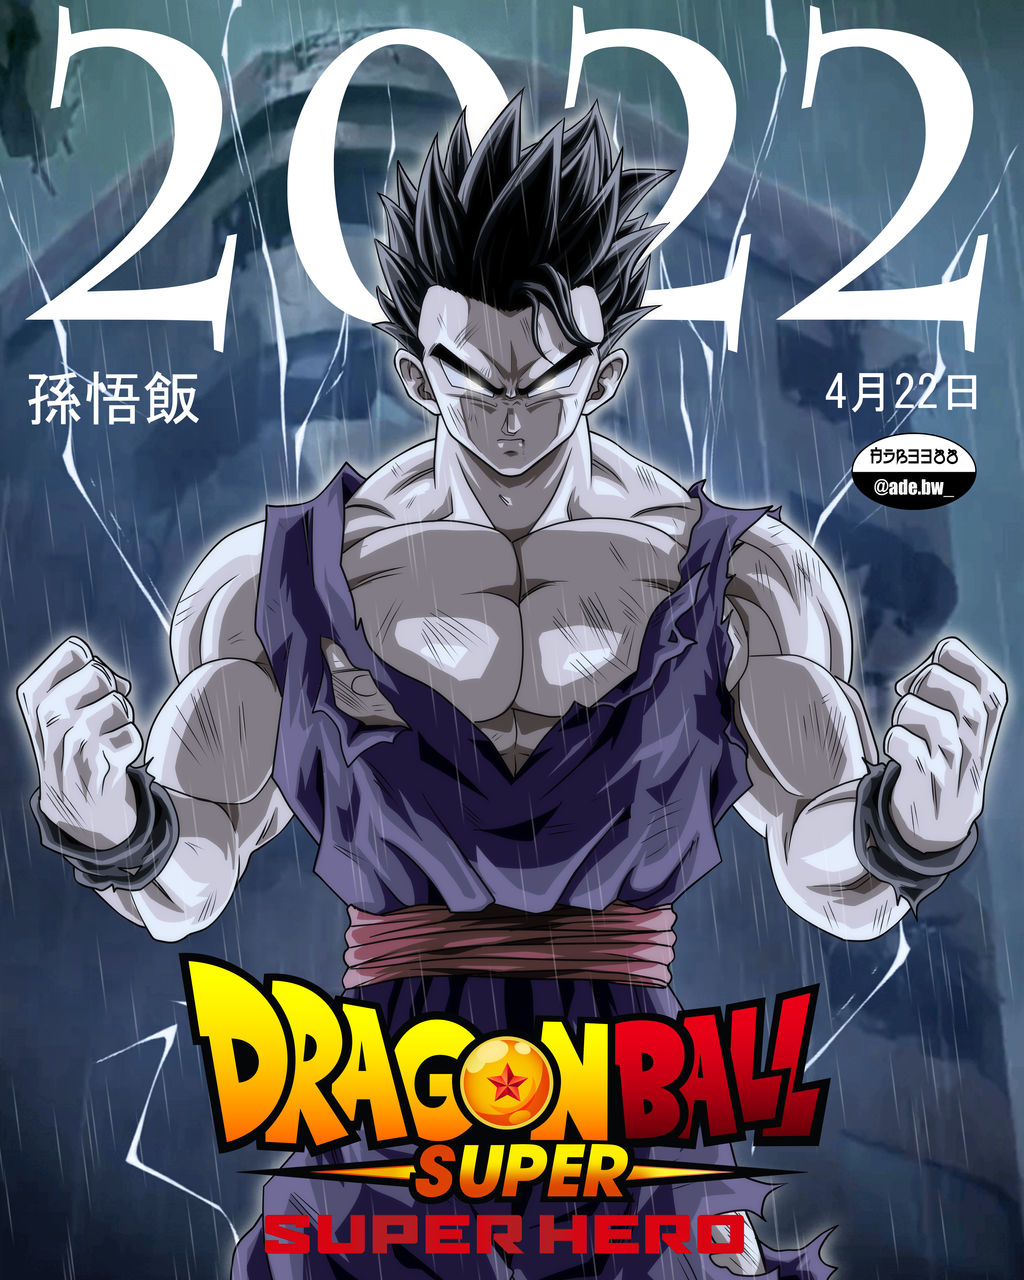 Final Gohan Beast Dragon Ball SuperHero Movie 2022 by PauloDbZ on DeviantArt